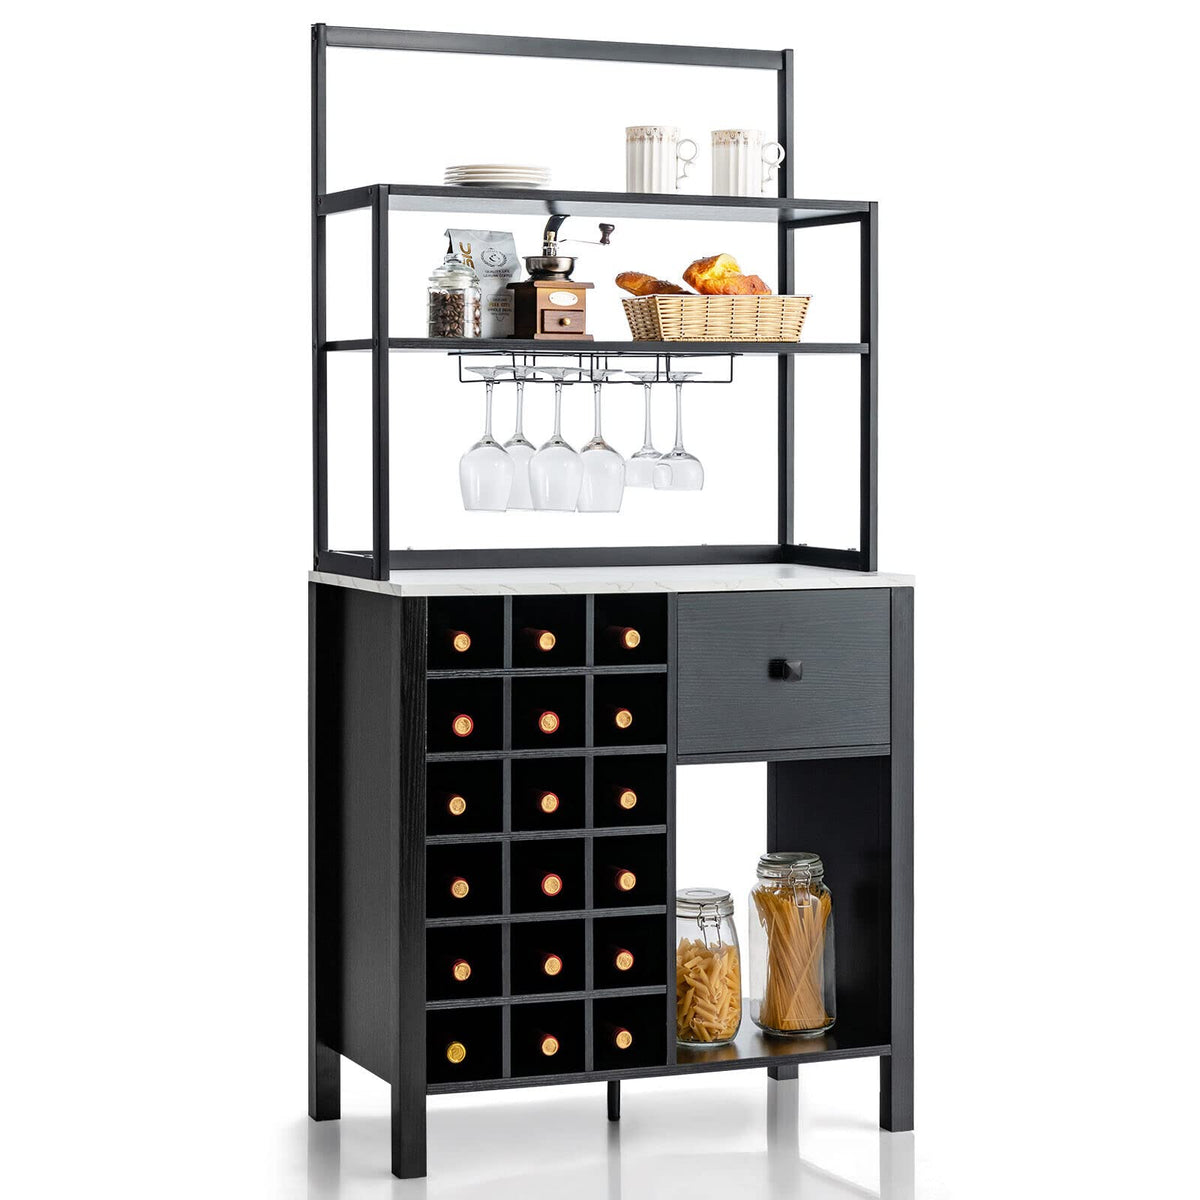 Giantex Kitchen Wine Rack, Freestanding Cabinet w/ Wine Glass Holder & Drawer, 4-Tier Bakers Rack